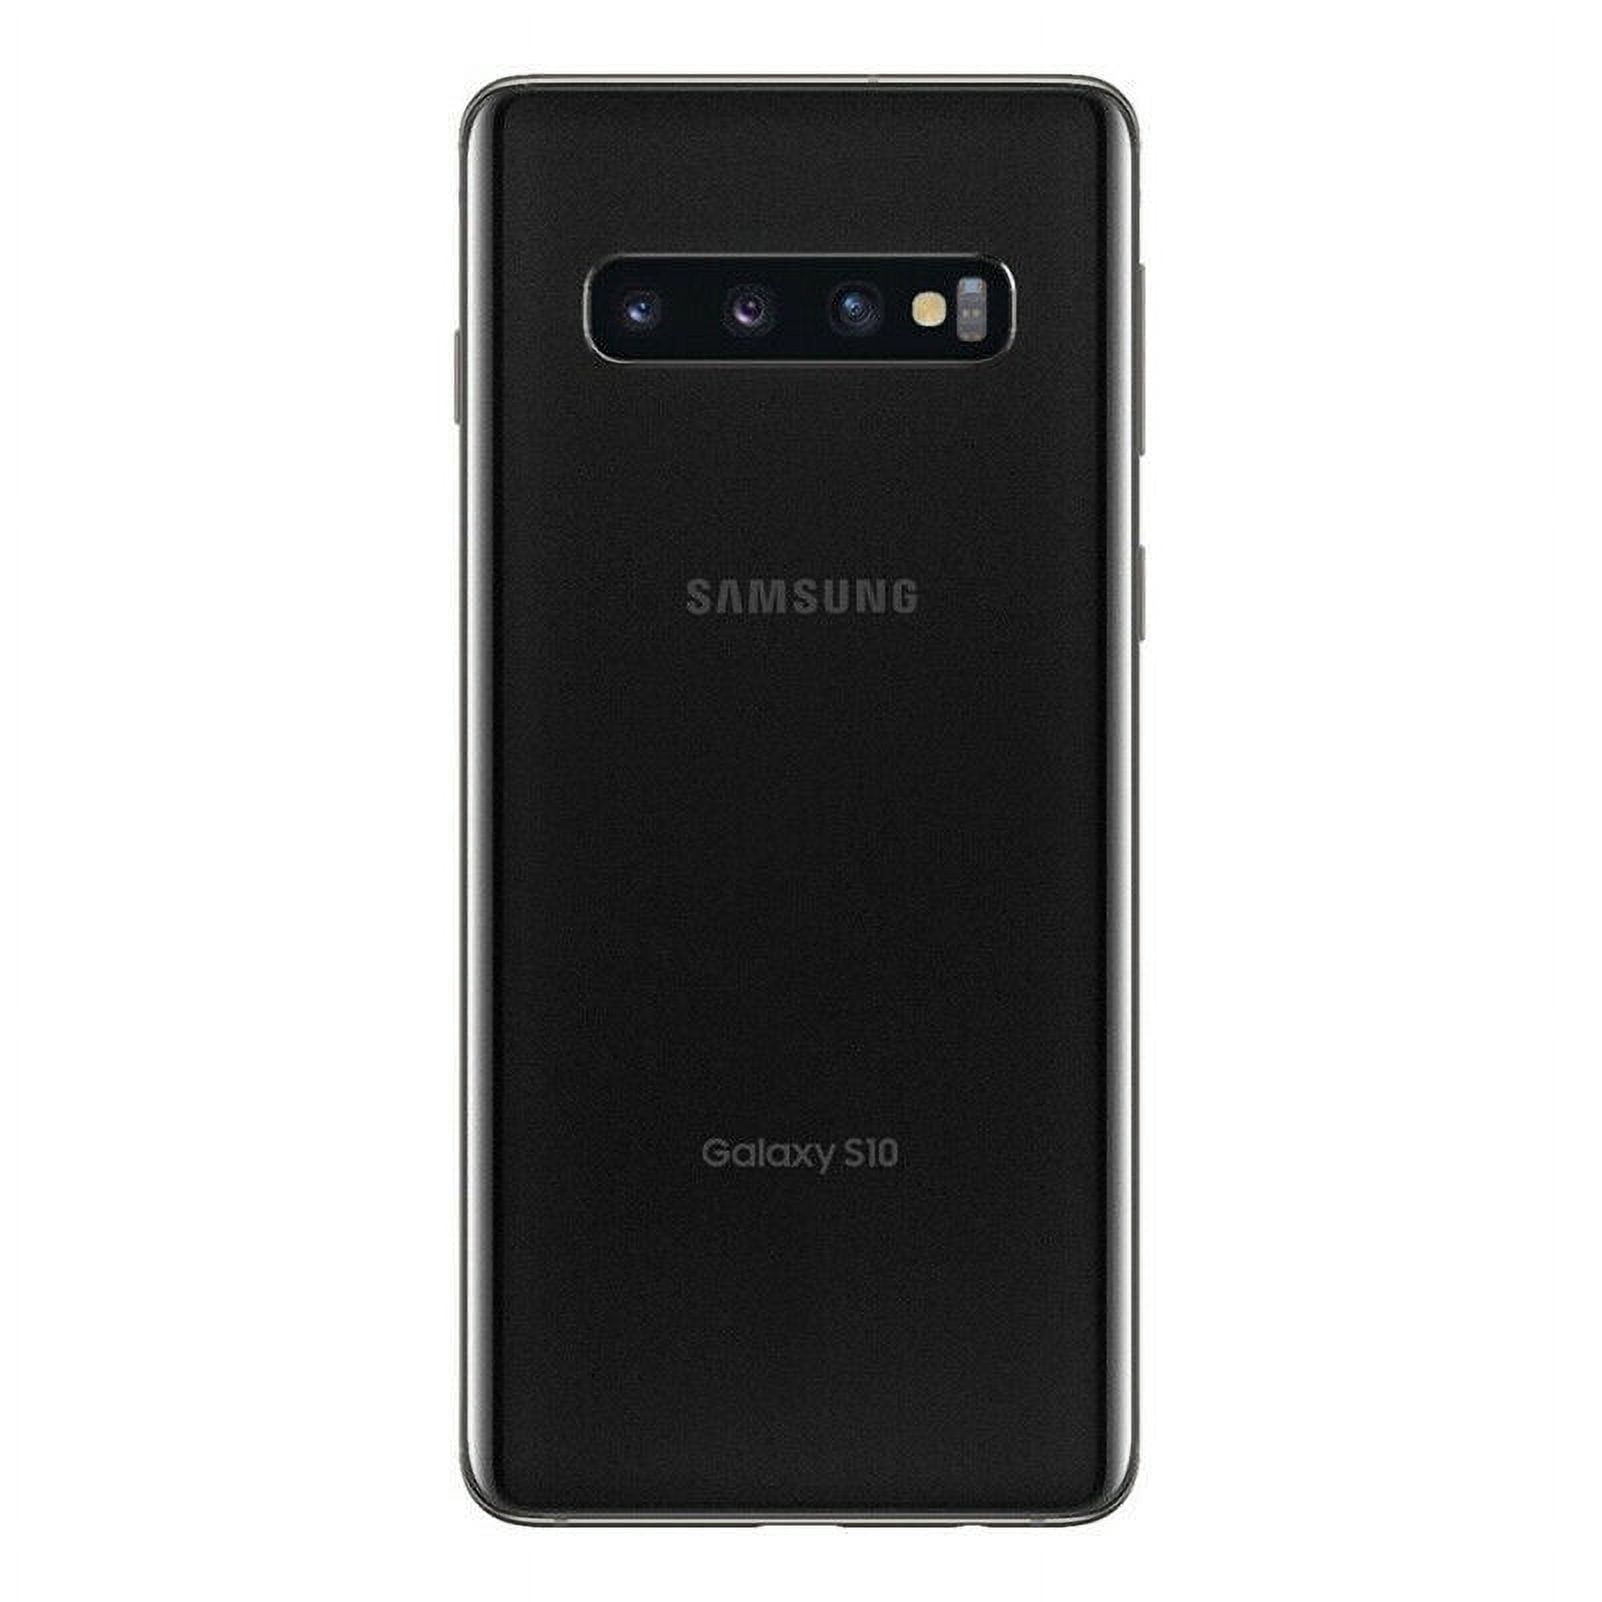 Samsung Galaxy S10 G973U 128GB Factory Unlocked Android